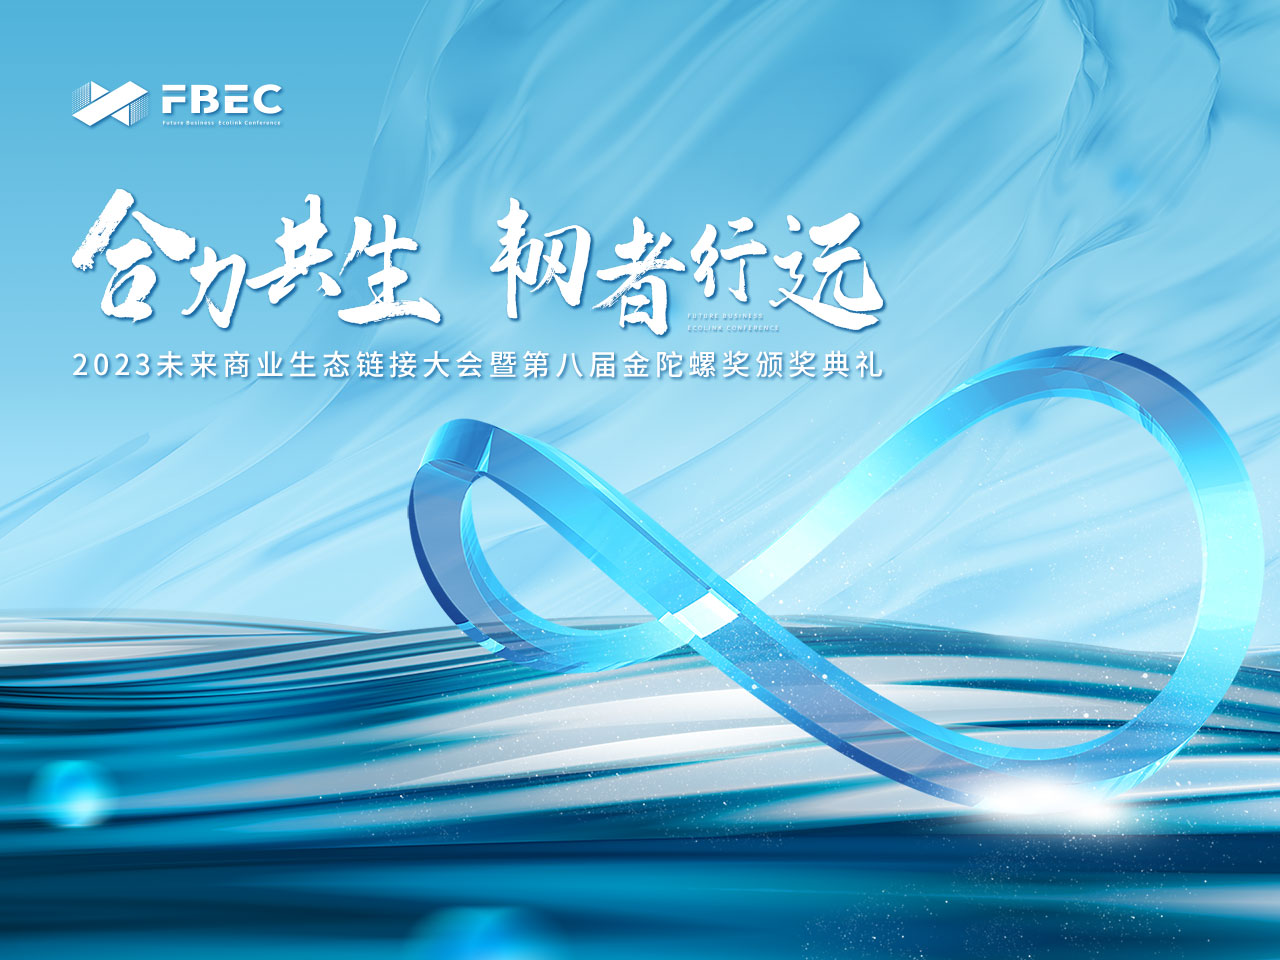 FBEC2023 | 亿境 总经理 石庆确认出席并发表主题演讲